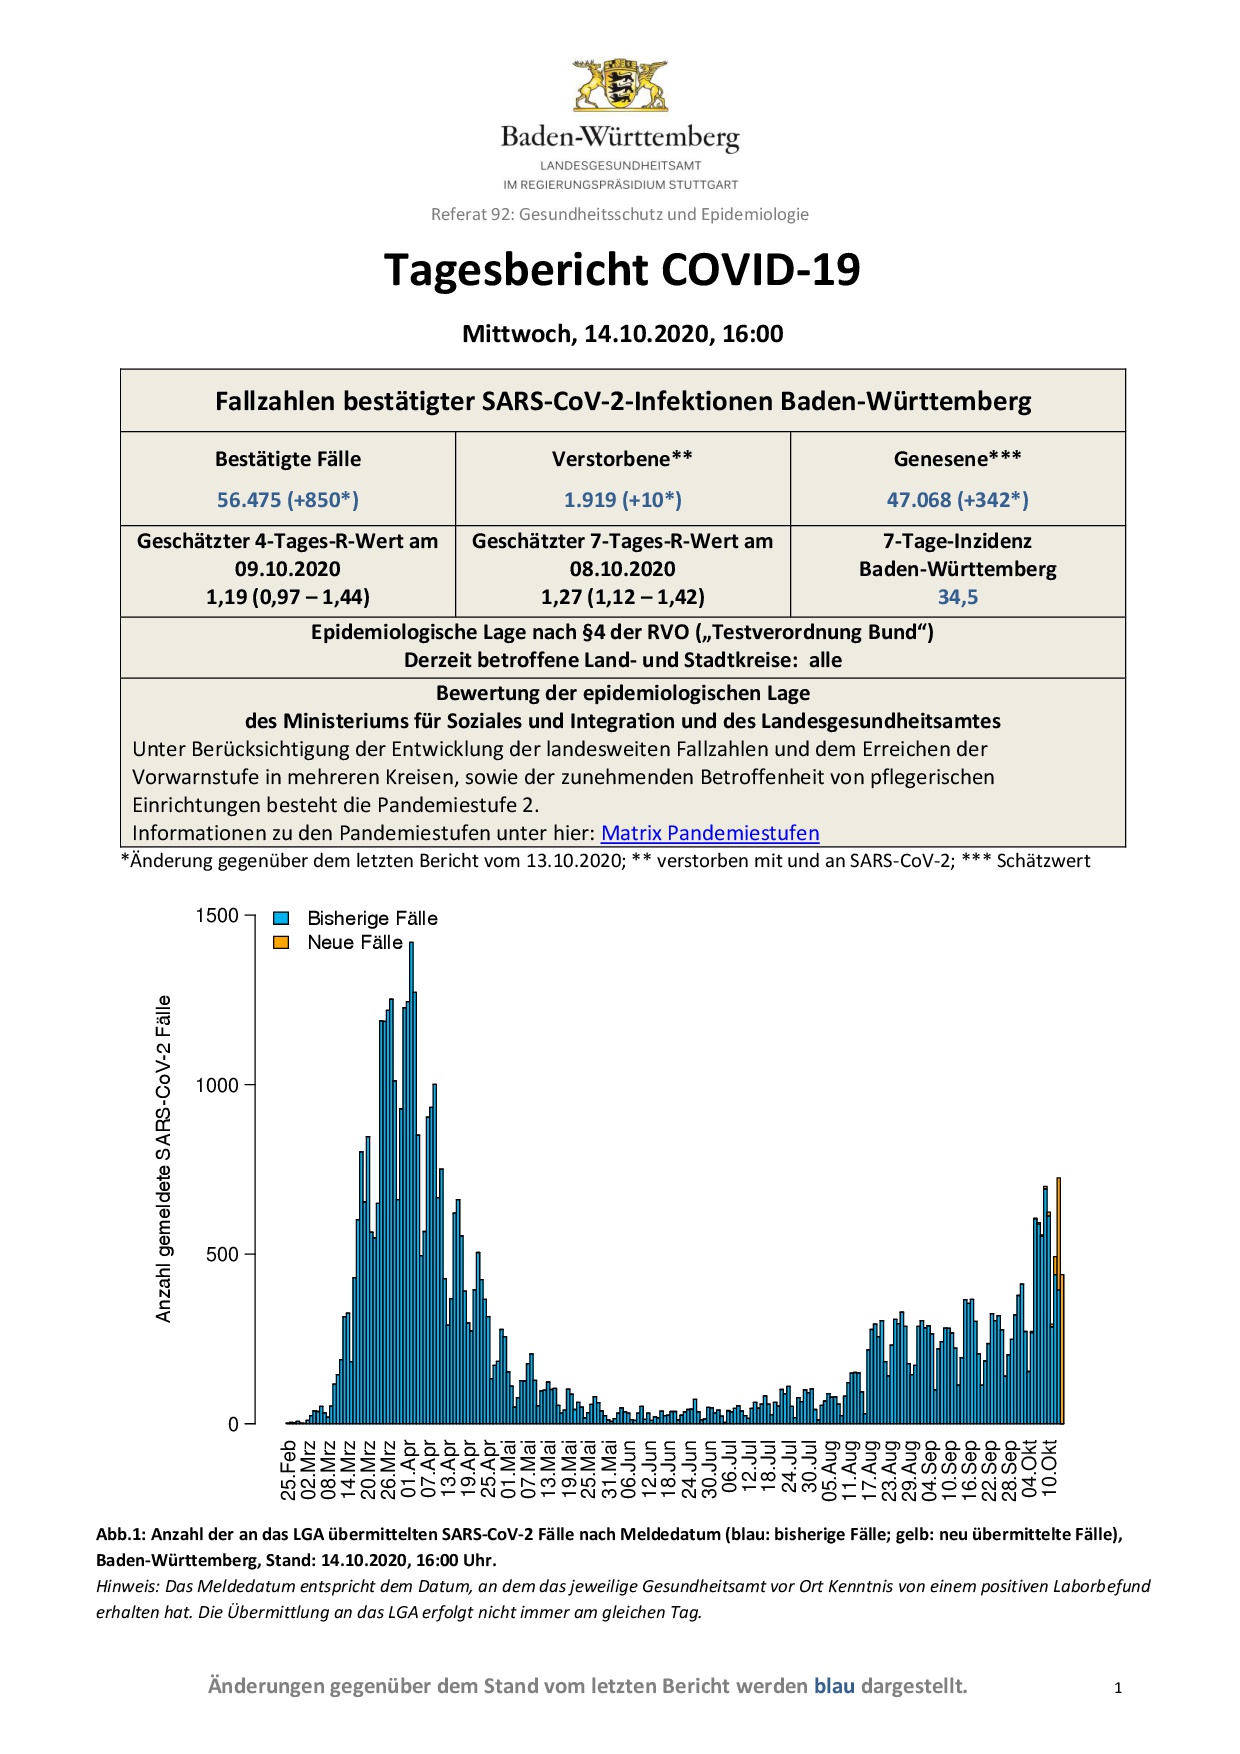 COVID-19 Tagesbericht (14.10.2020) des Landesgesundheitsamts Baden-Württemberg